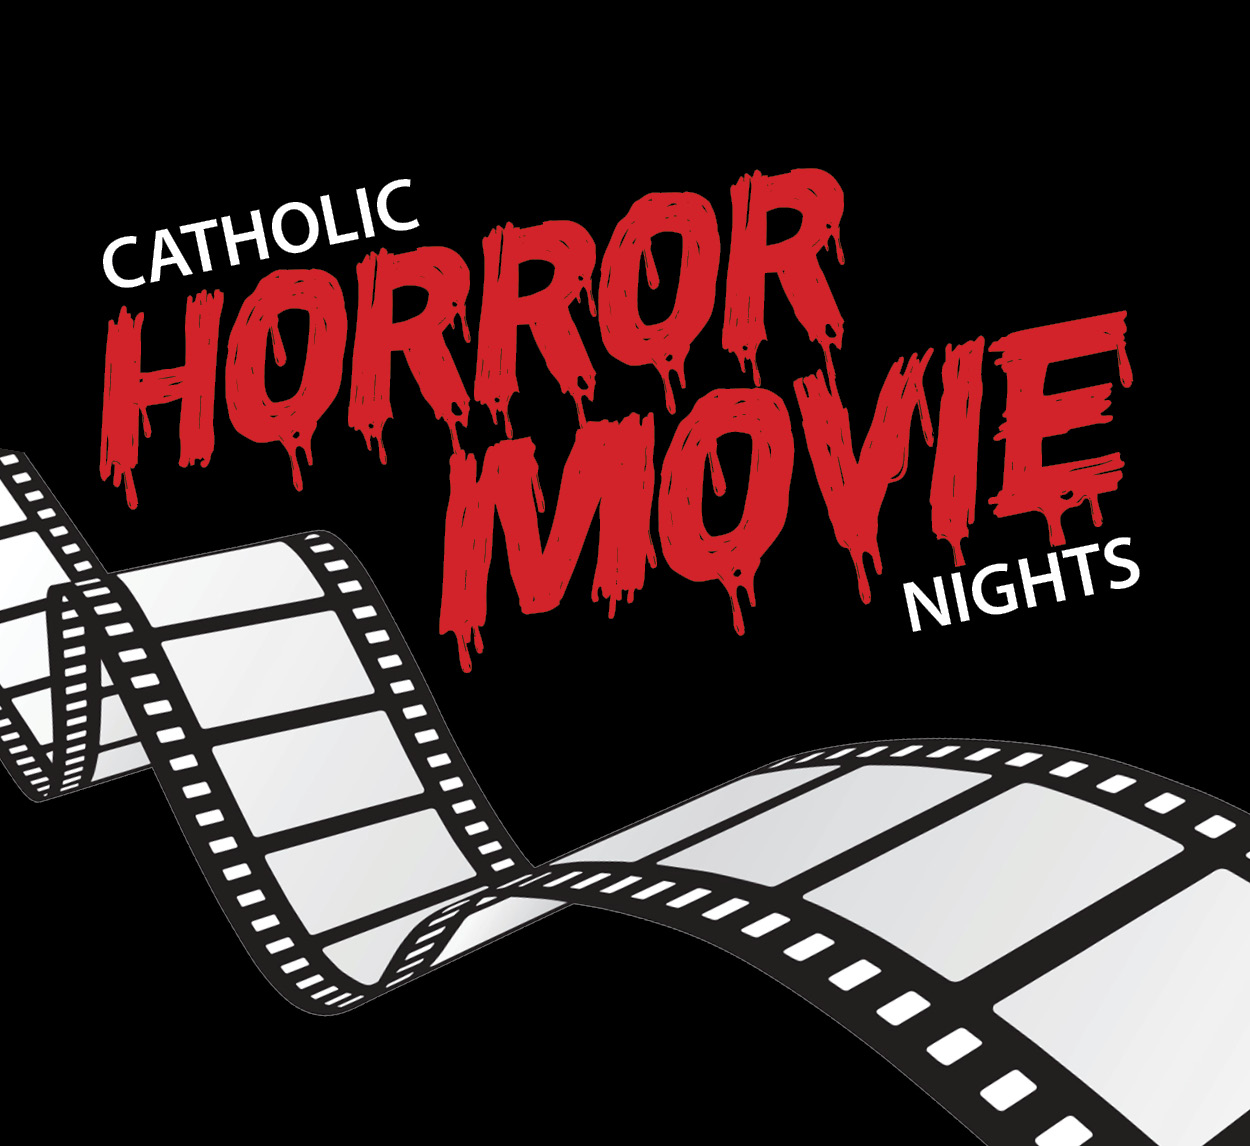 Catholic Horror Movie Nights Presents "The Exorcist"